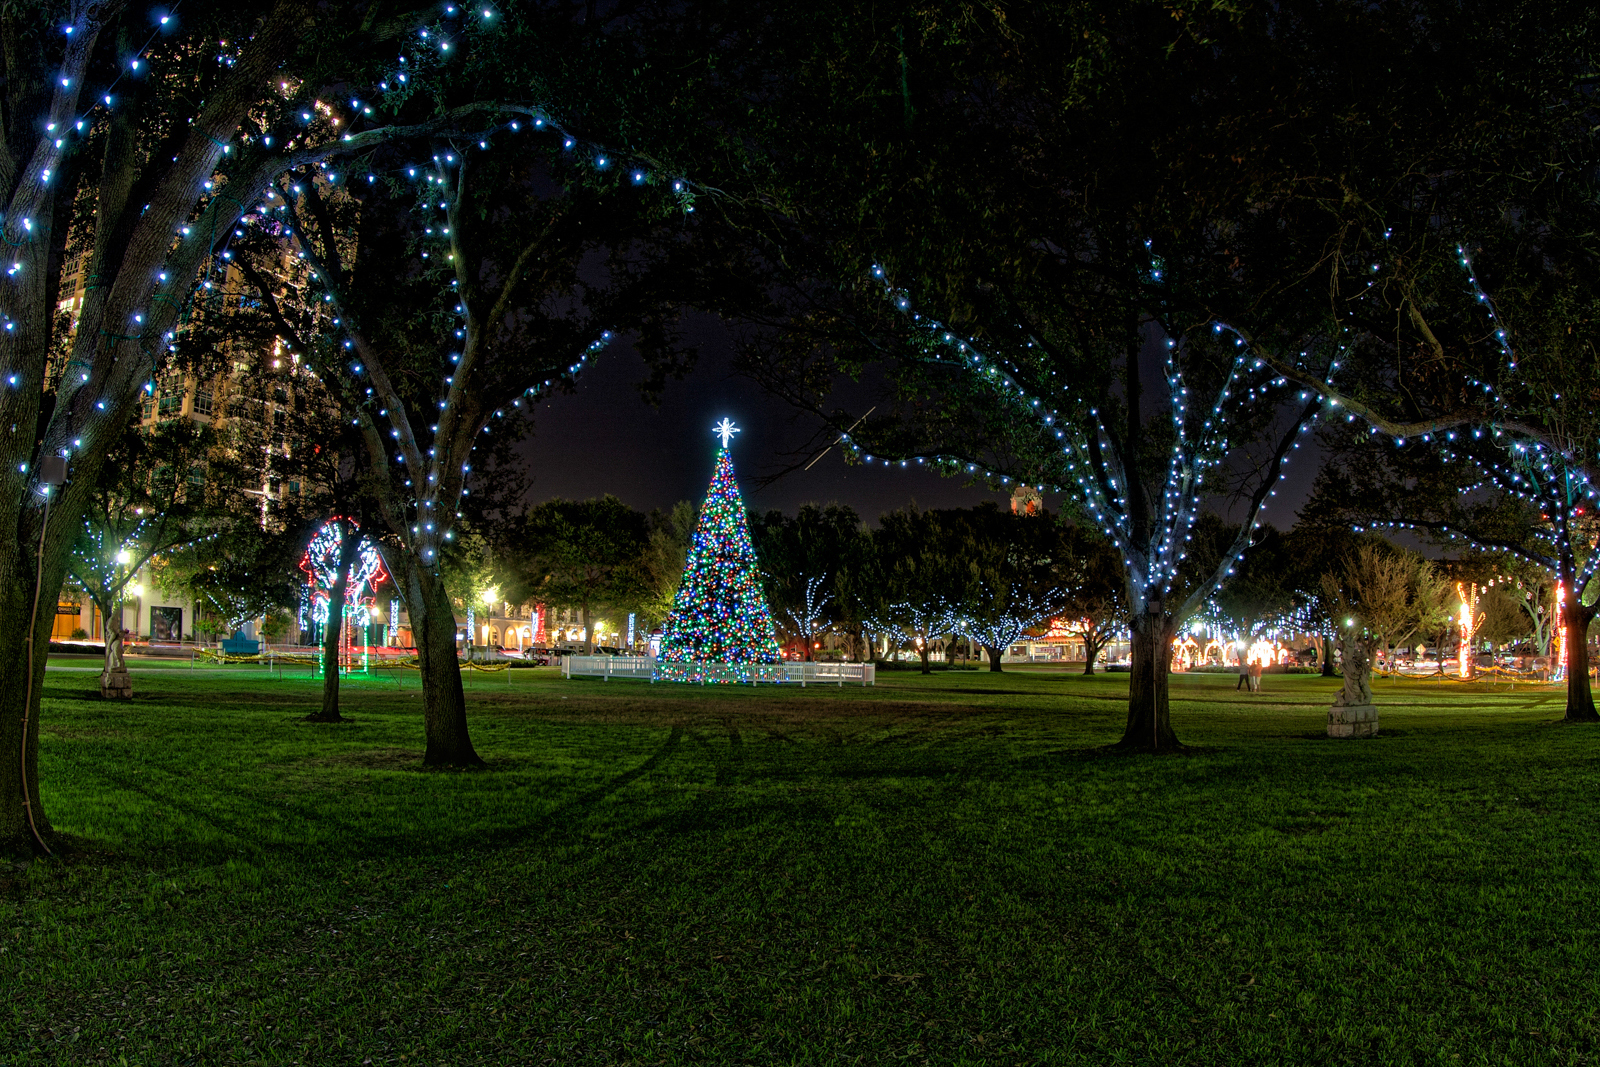 St Petersburg Christmas Tree and Lights